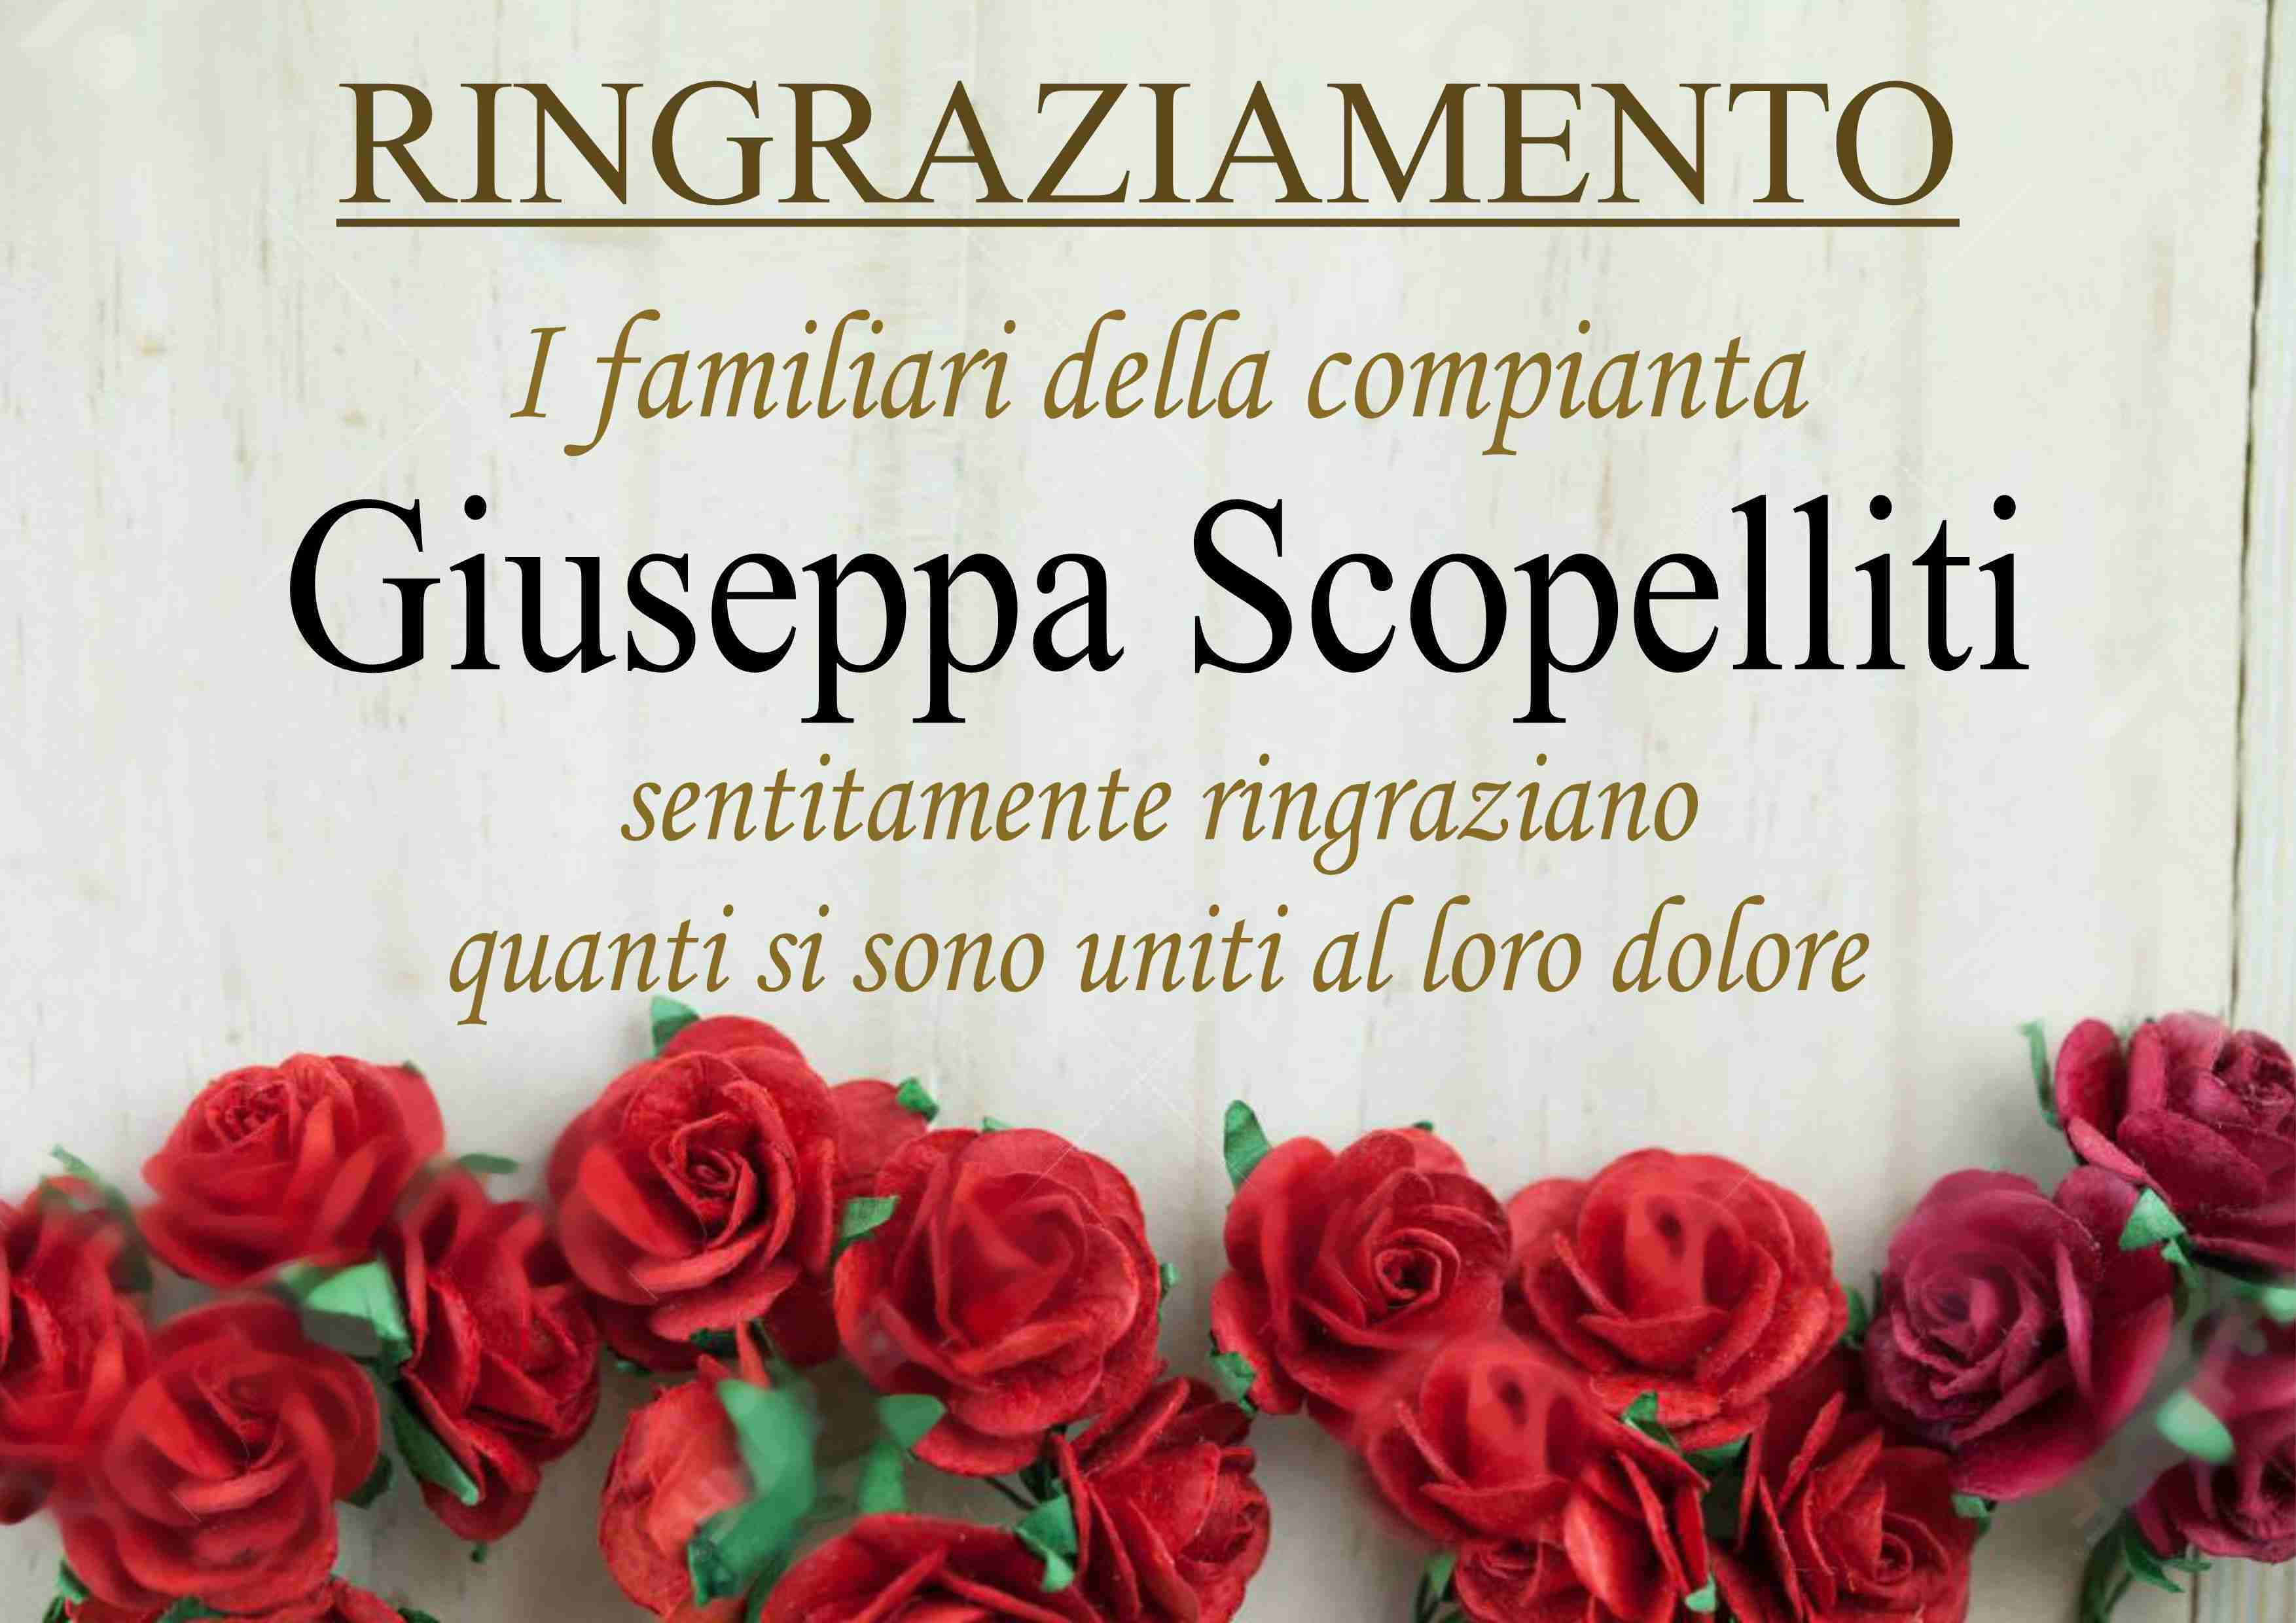 Giuseppa Scopelliti